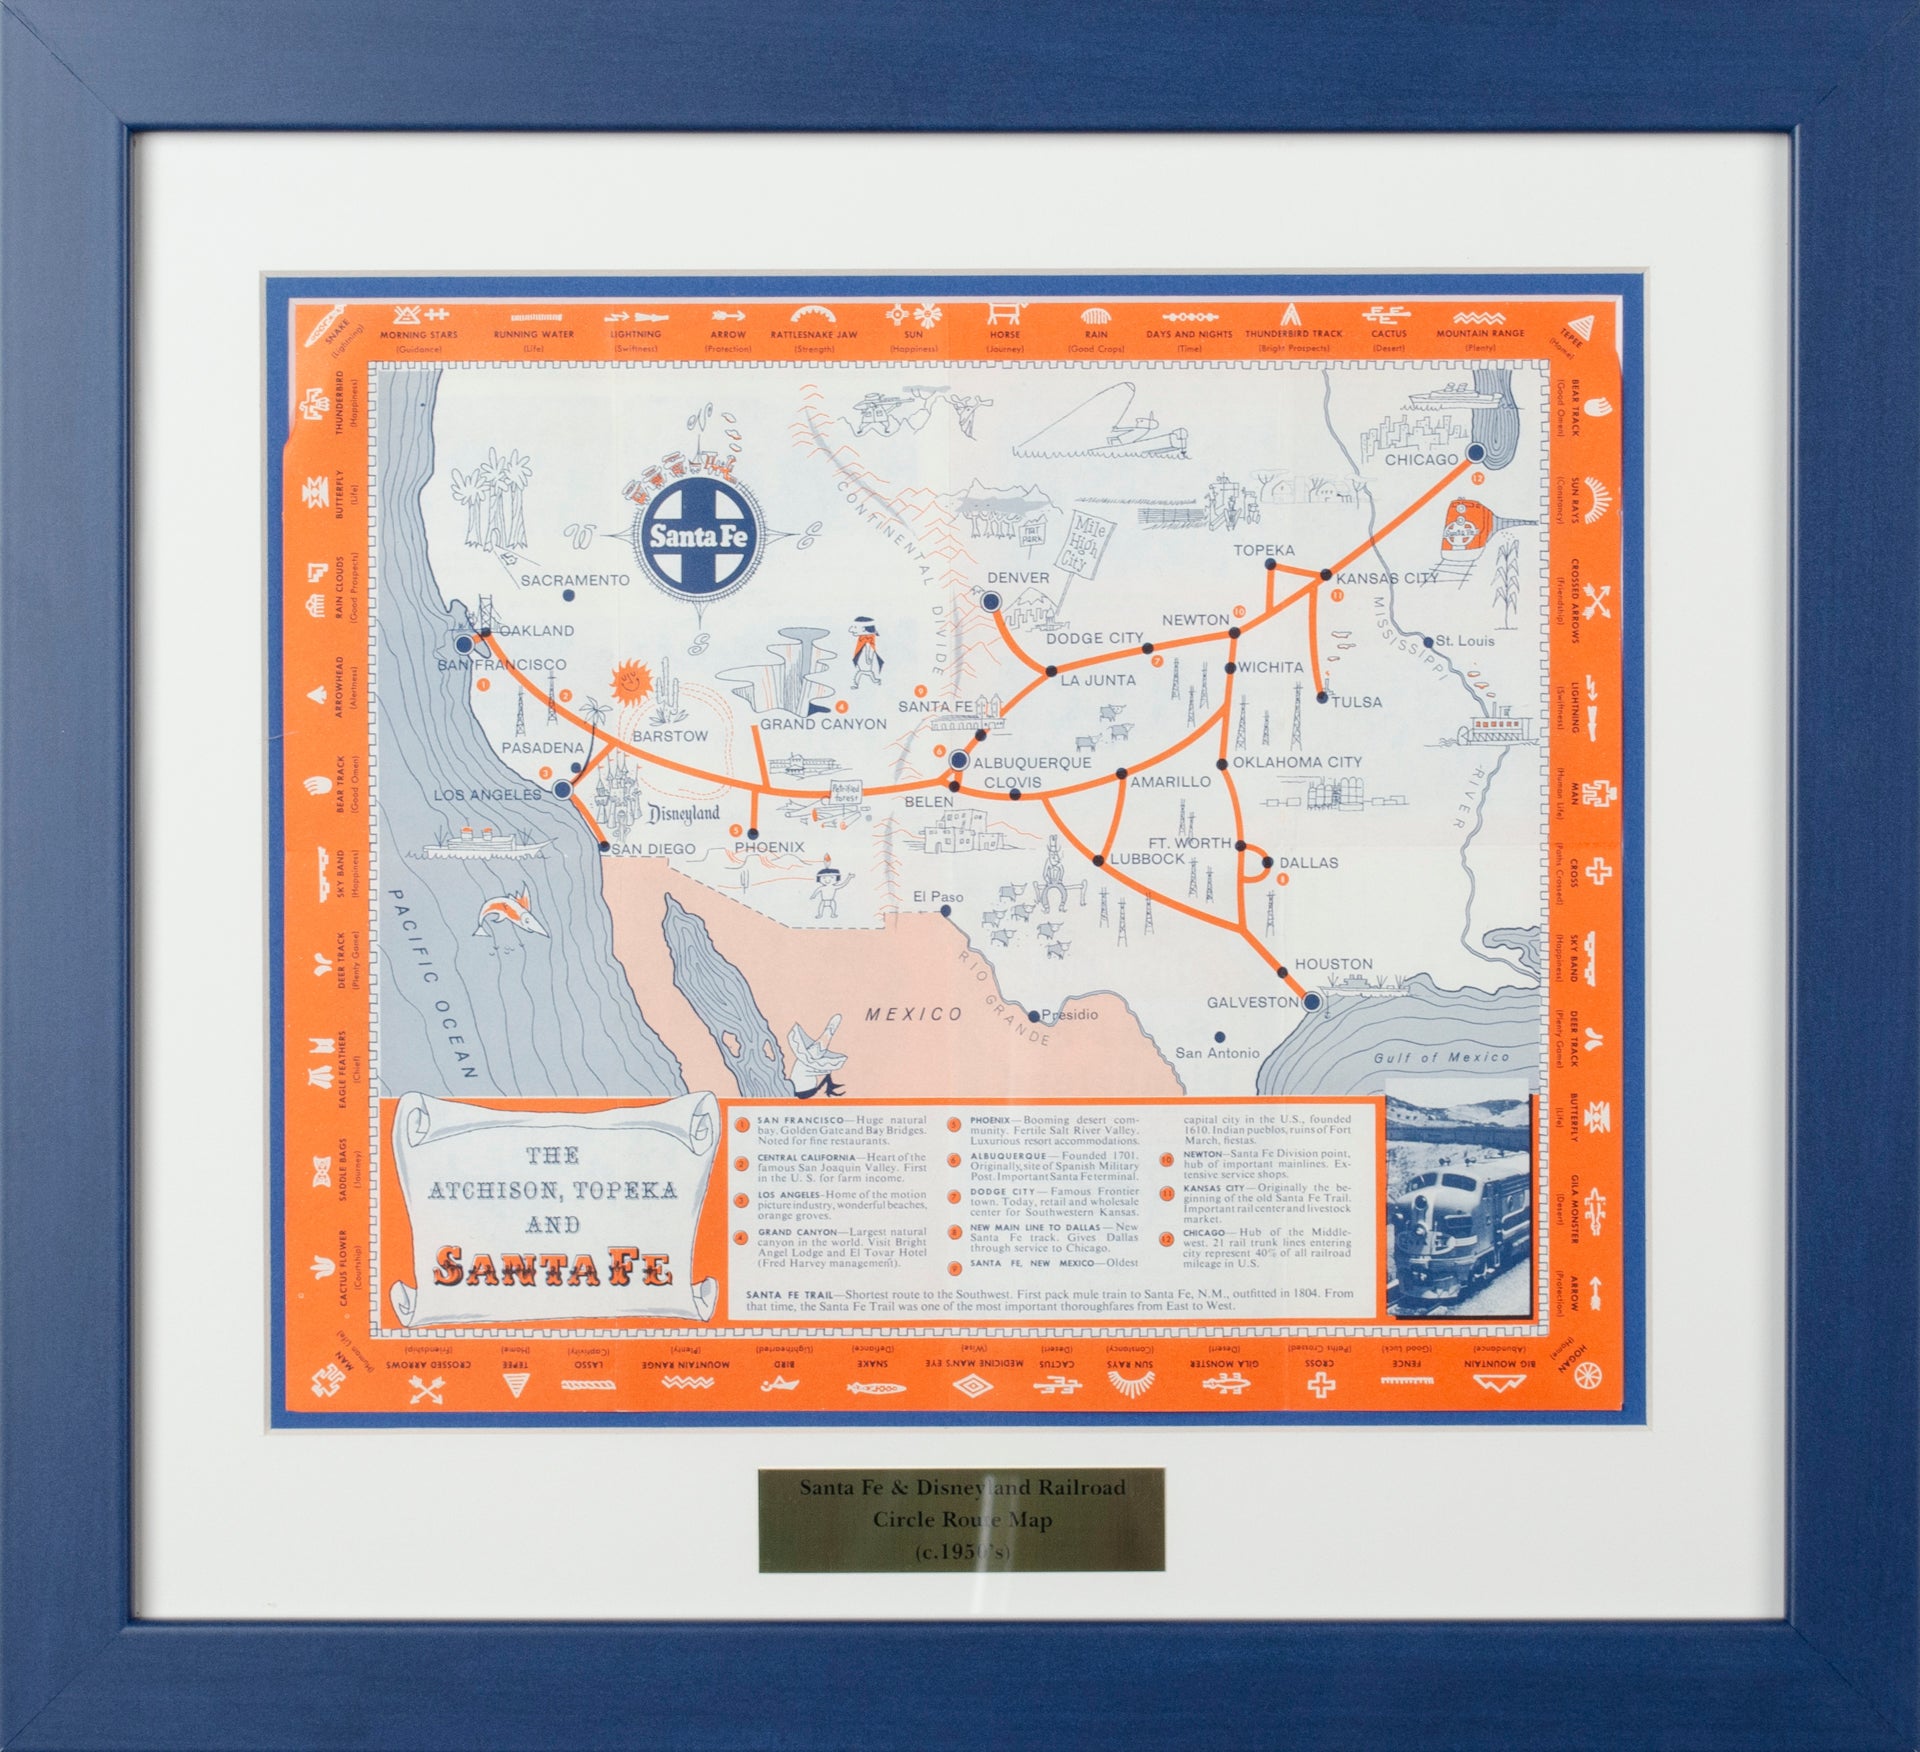 Sante Fe & Disneyland Railroad Circle Route Map c.1950s